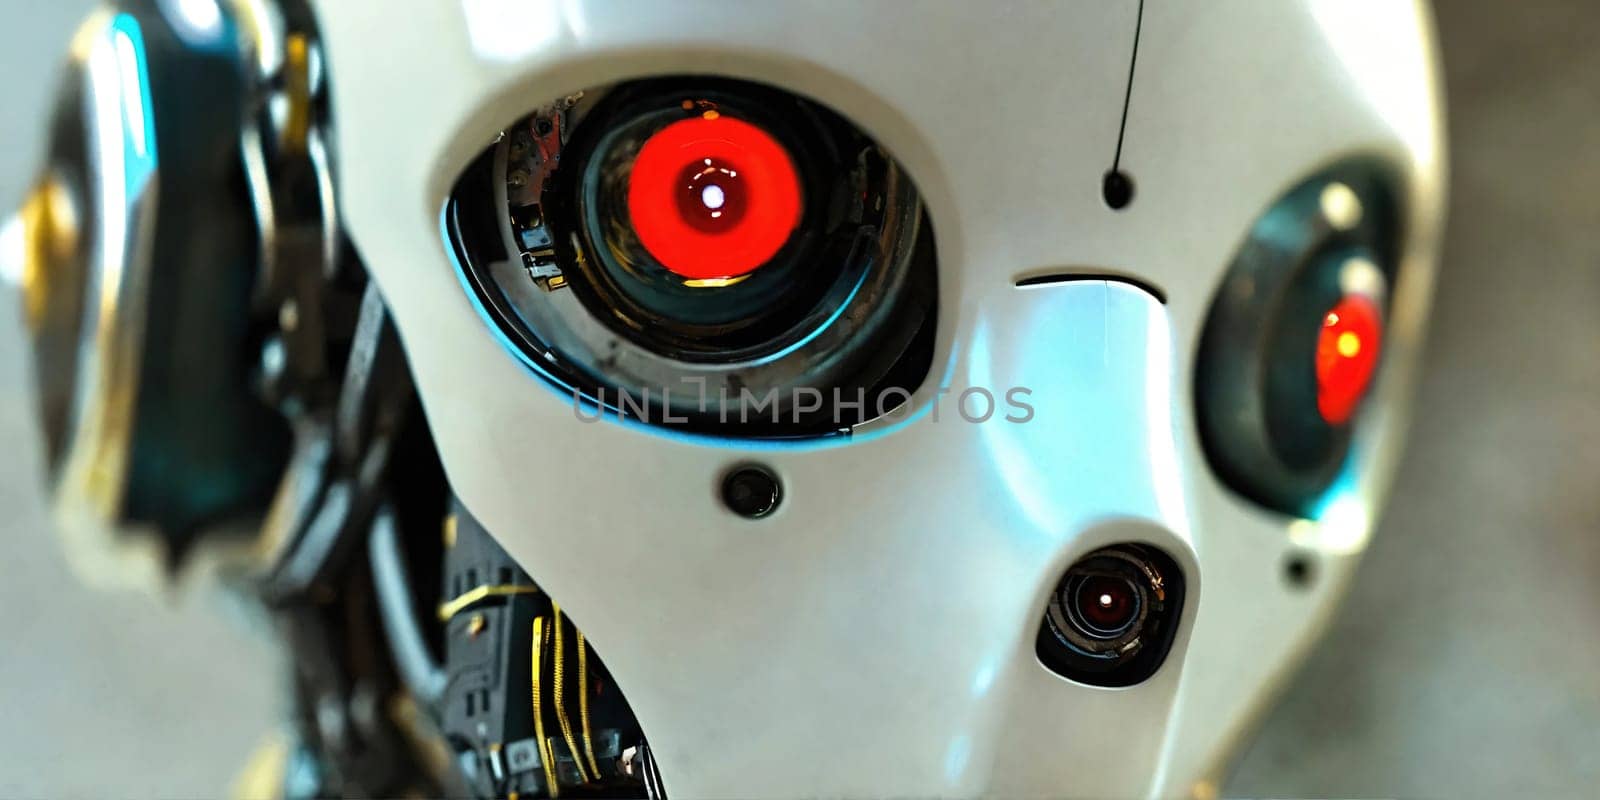 A white robot that looks like a human. Generative AI by gordiza